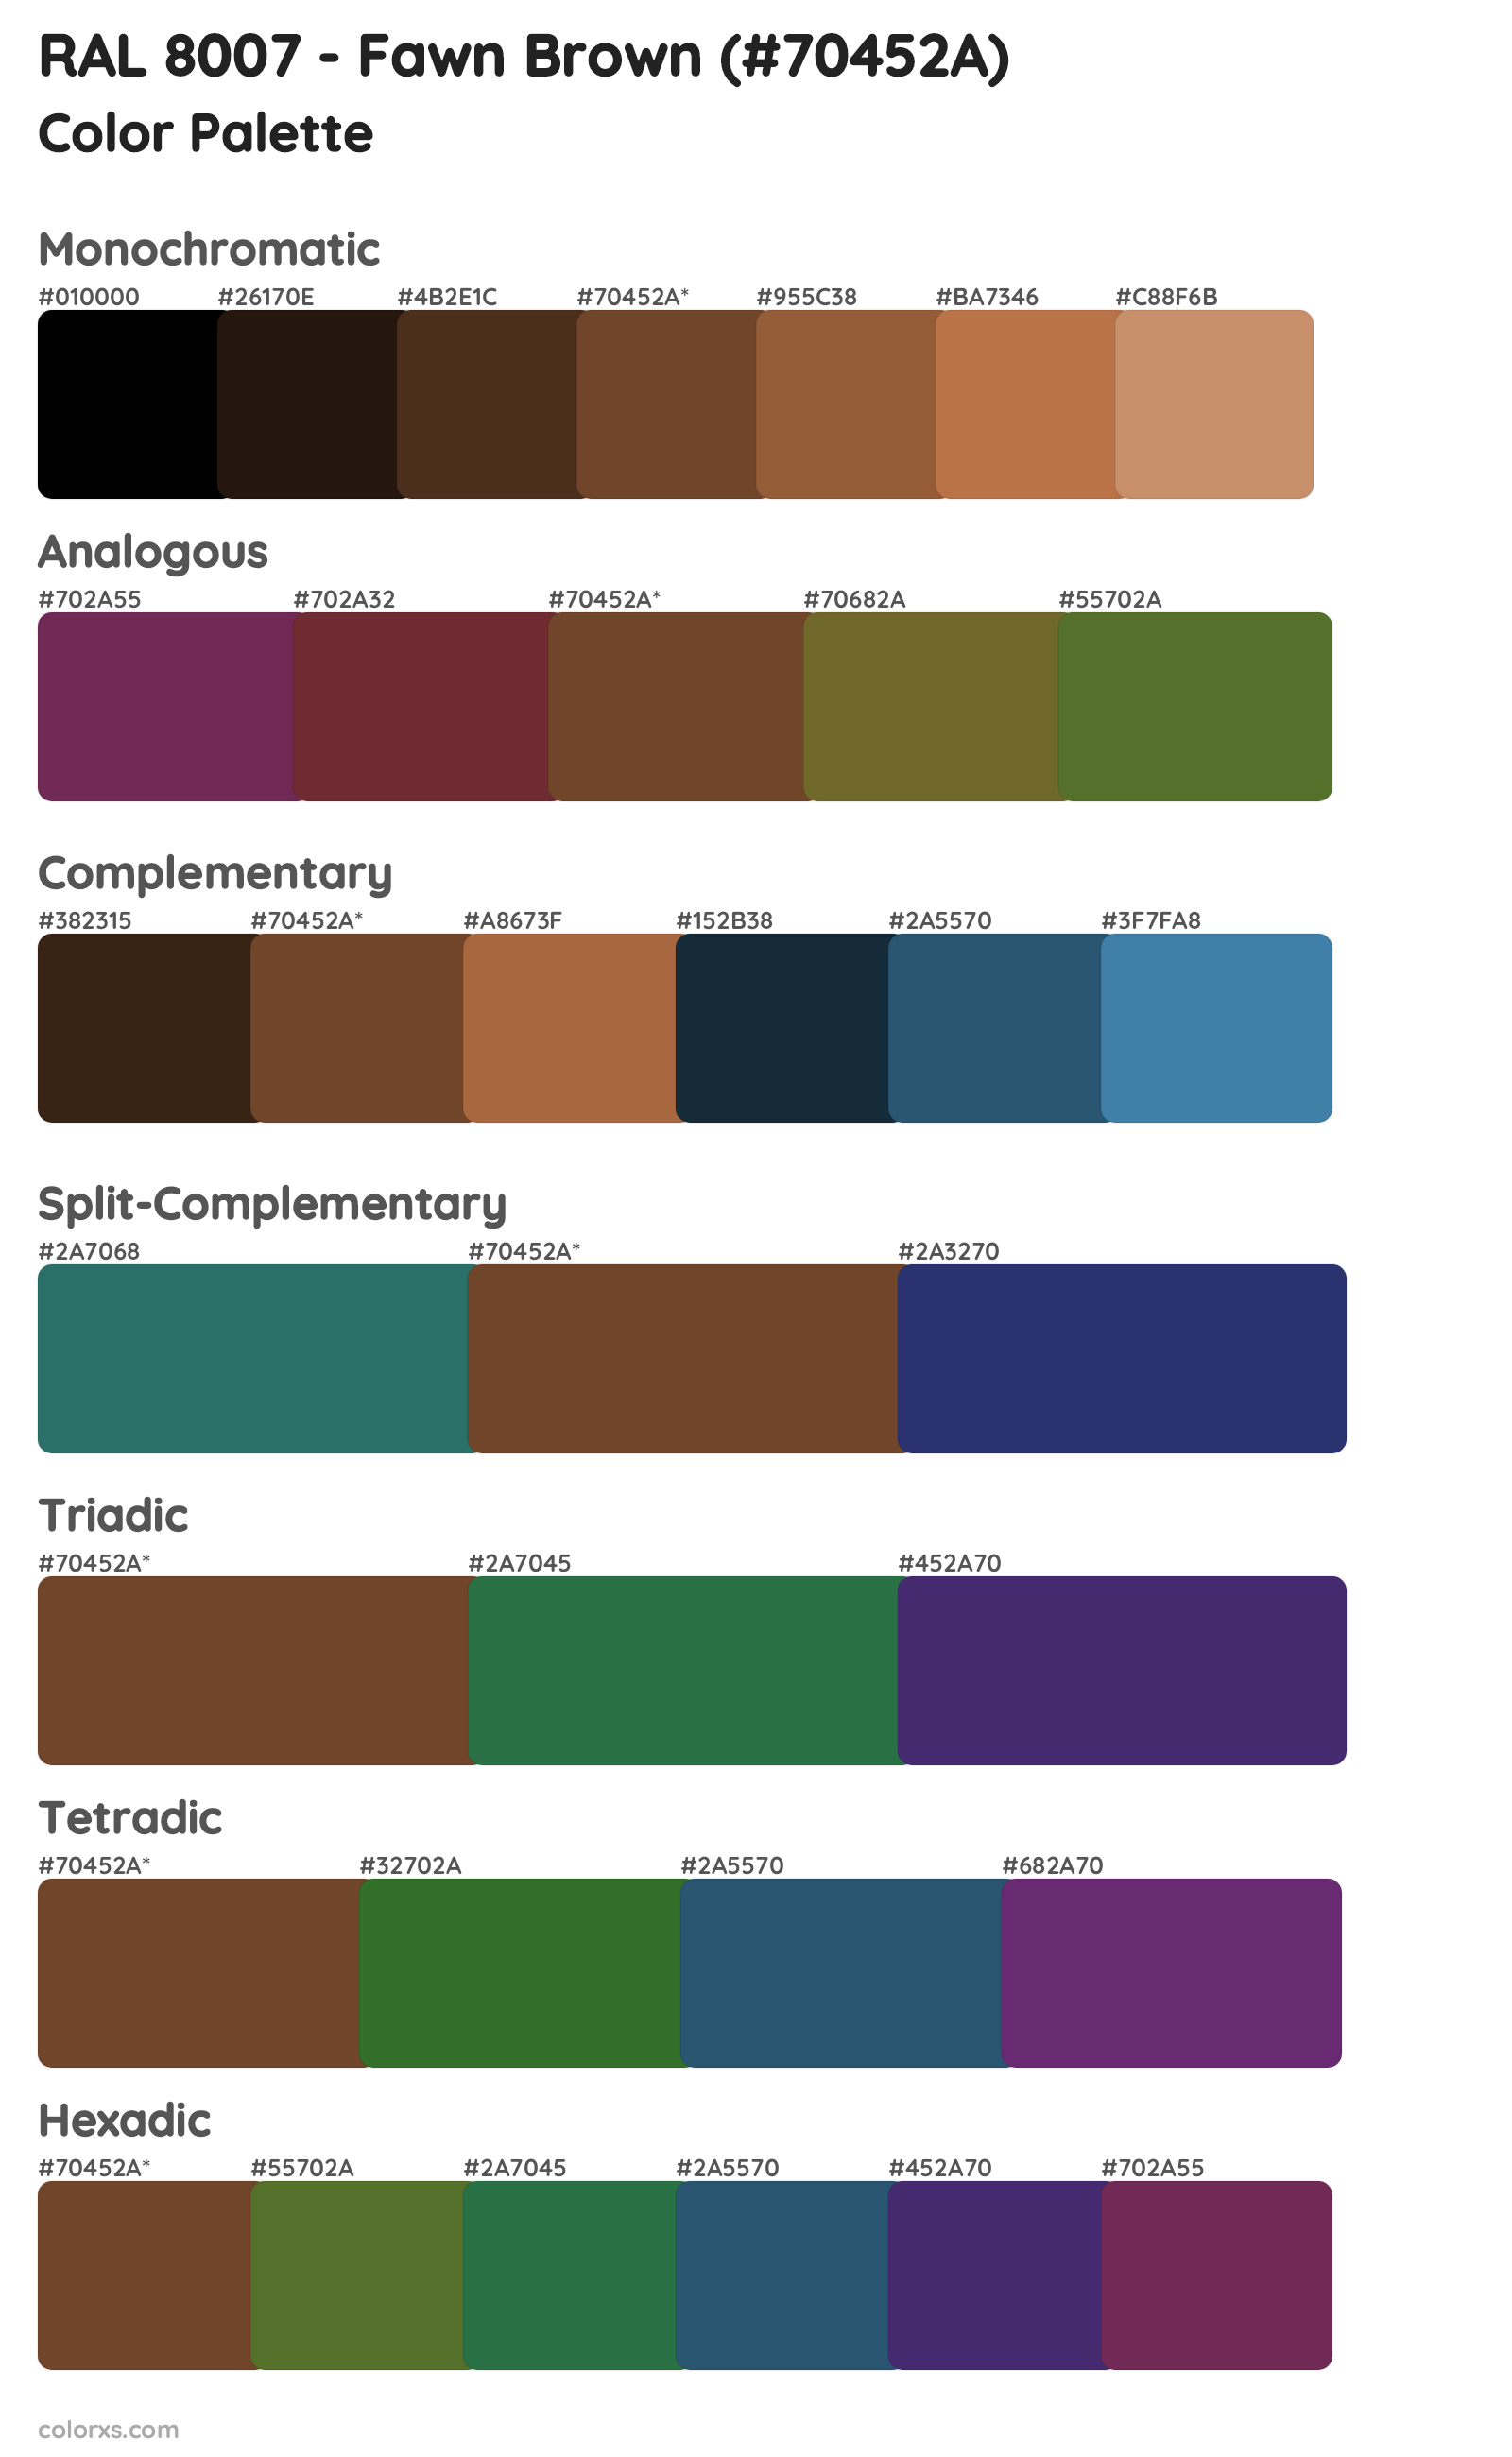 RAL 8007 - Fawn Brown Color Scheme Palettes